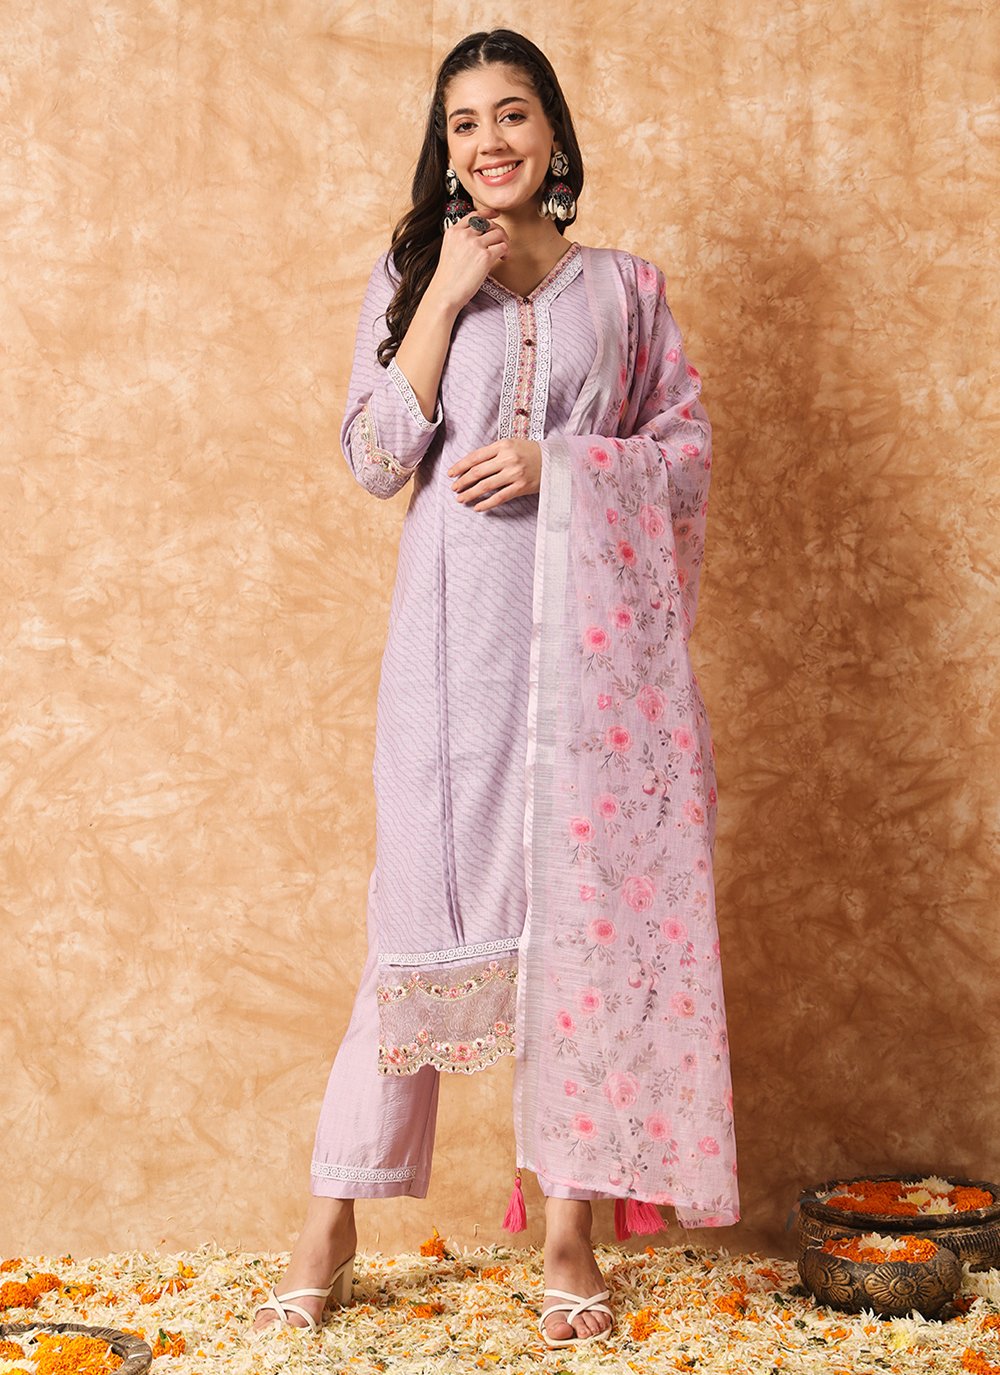 Purple & Violet Salwar Kameez | Buy Purple Color Salwar Suits